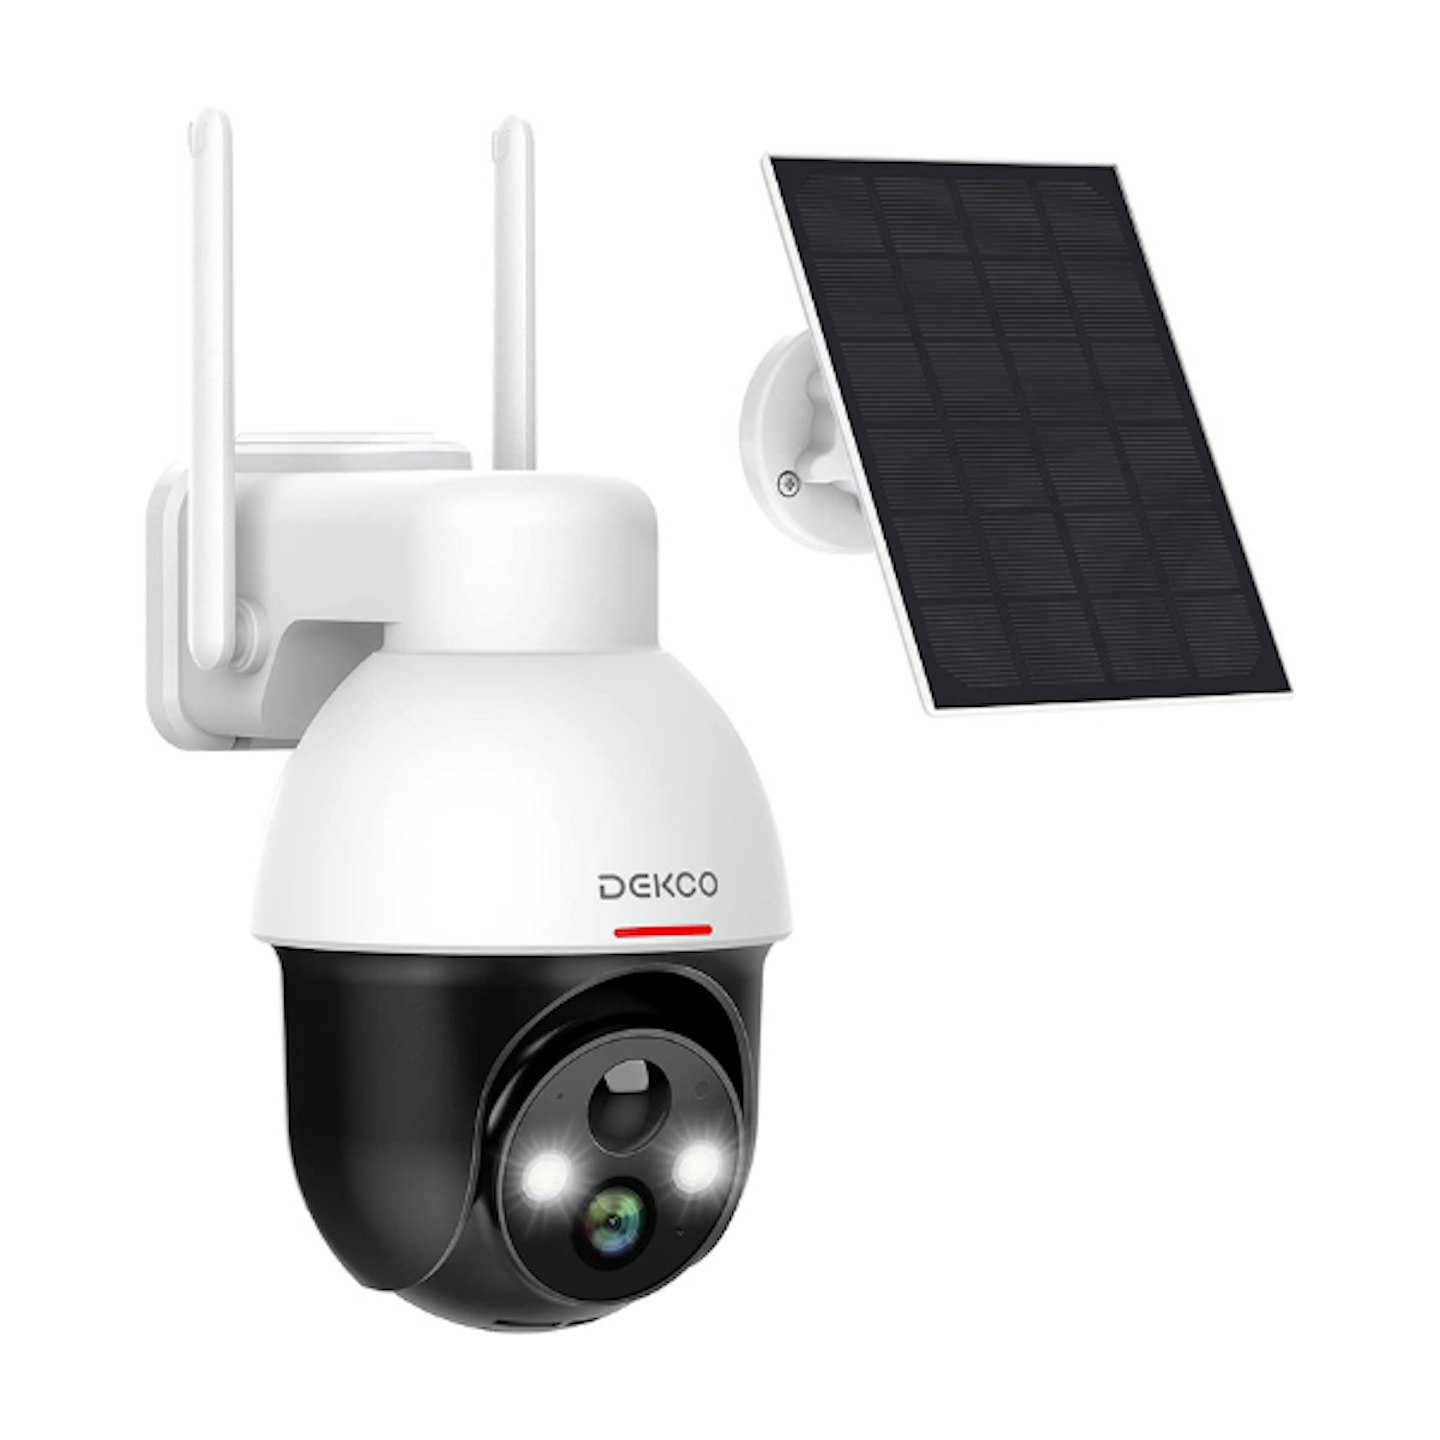 DEKCO Outdoor Solar Home Security Dome Camera w/ WiFi & Alarm (2